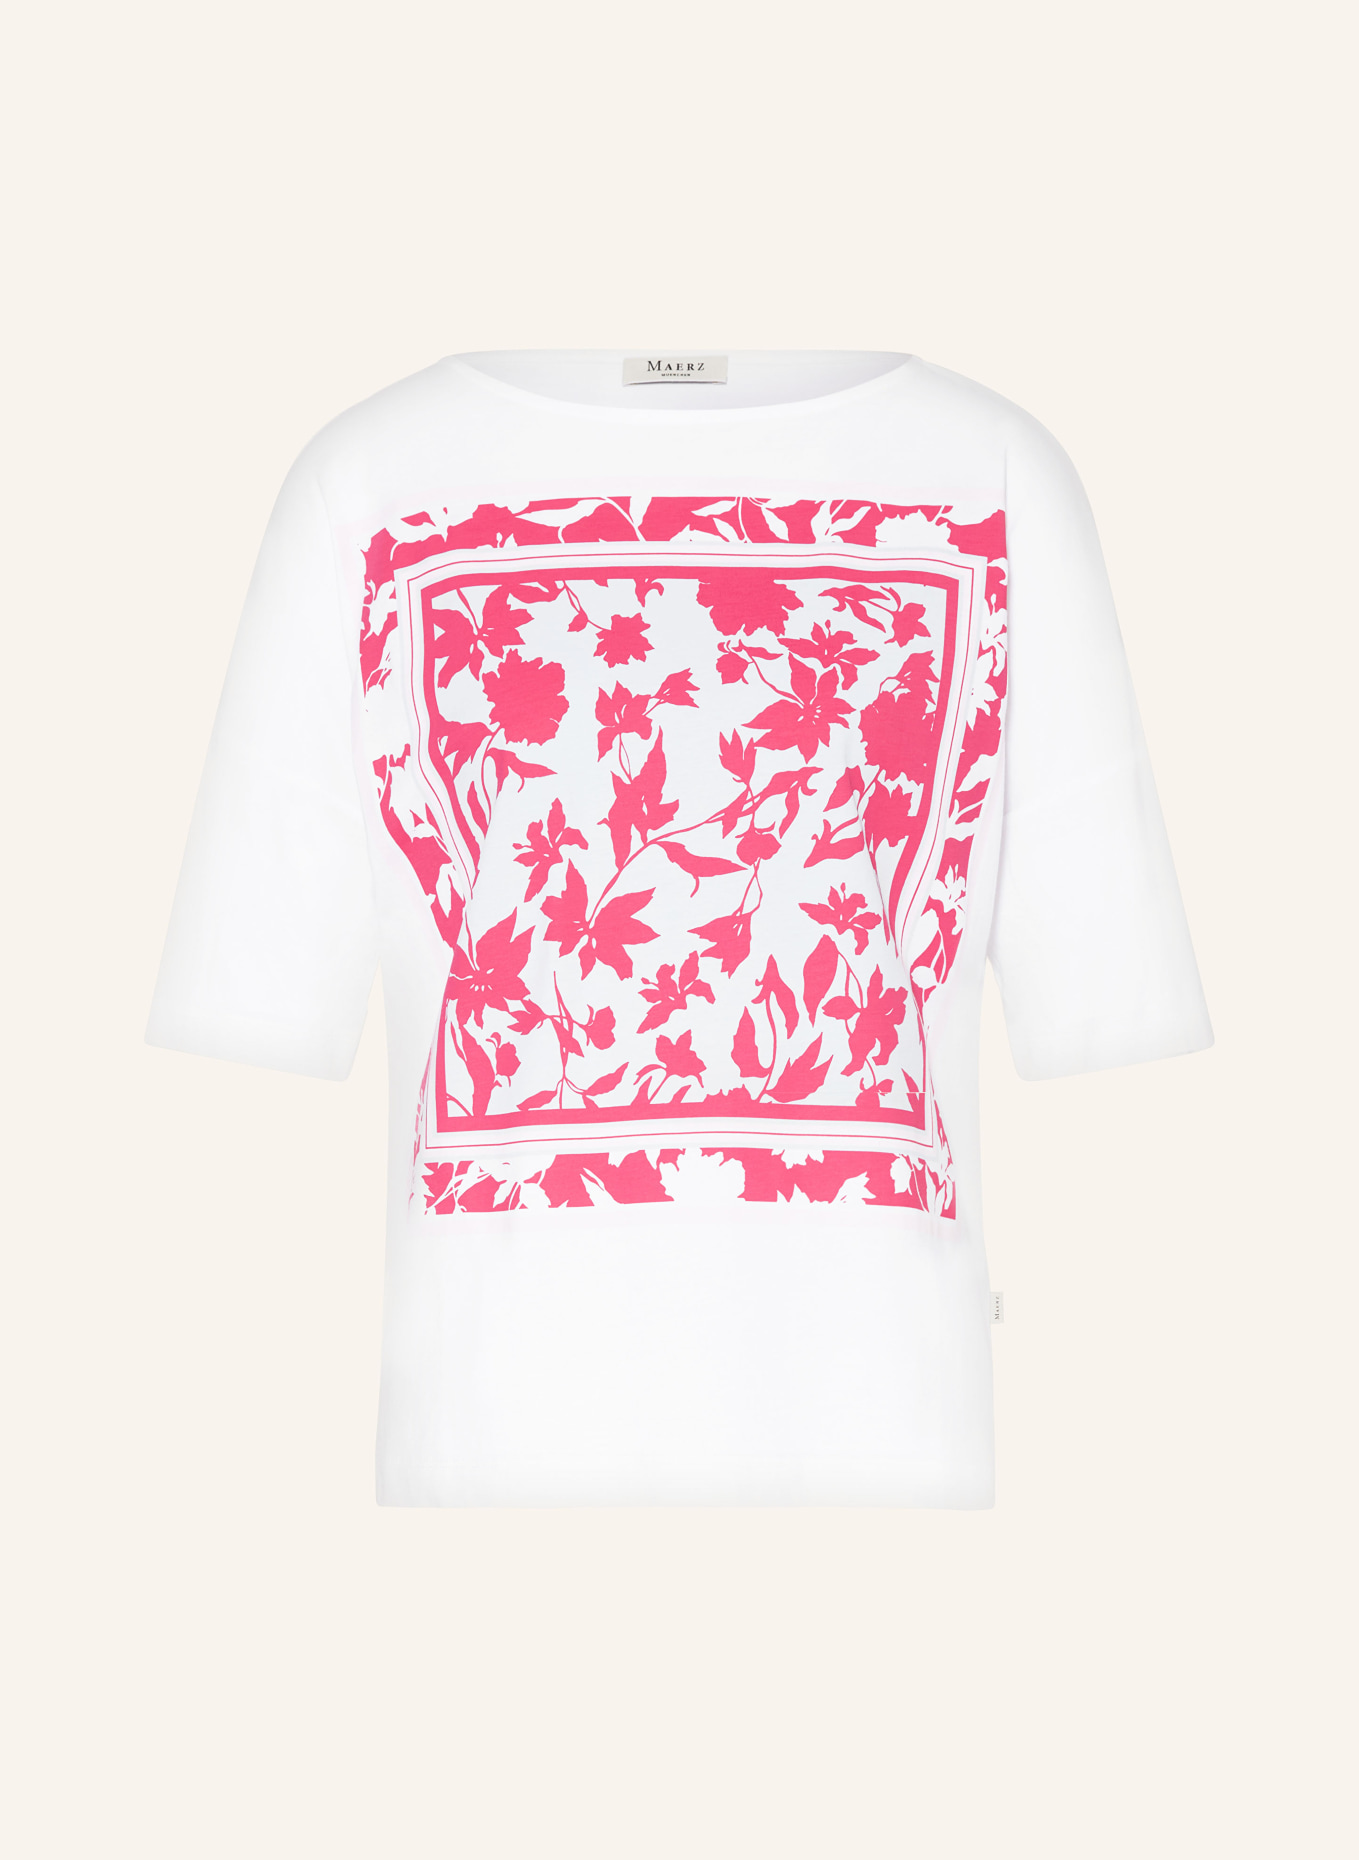 MAERZ MUENCHEN T-Shirt, Farbe: WEISS/ PINK/ HELLBLAU (Bild 1)